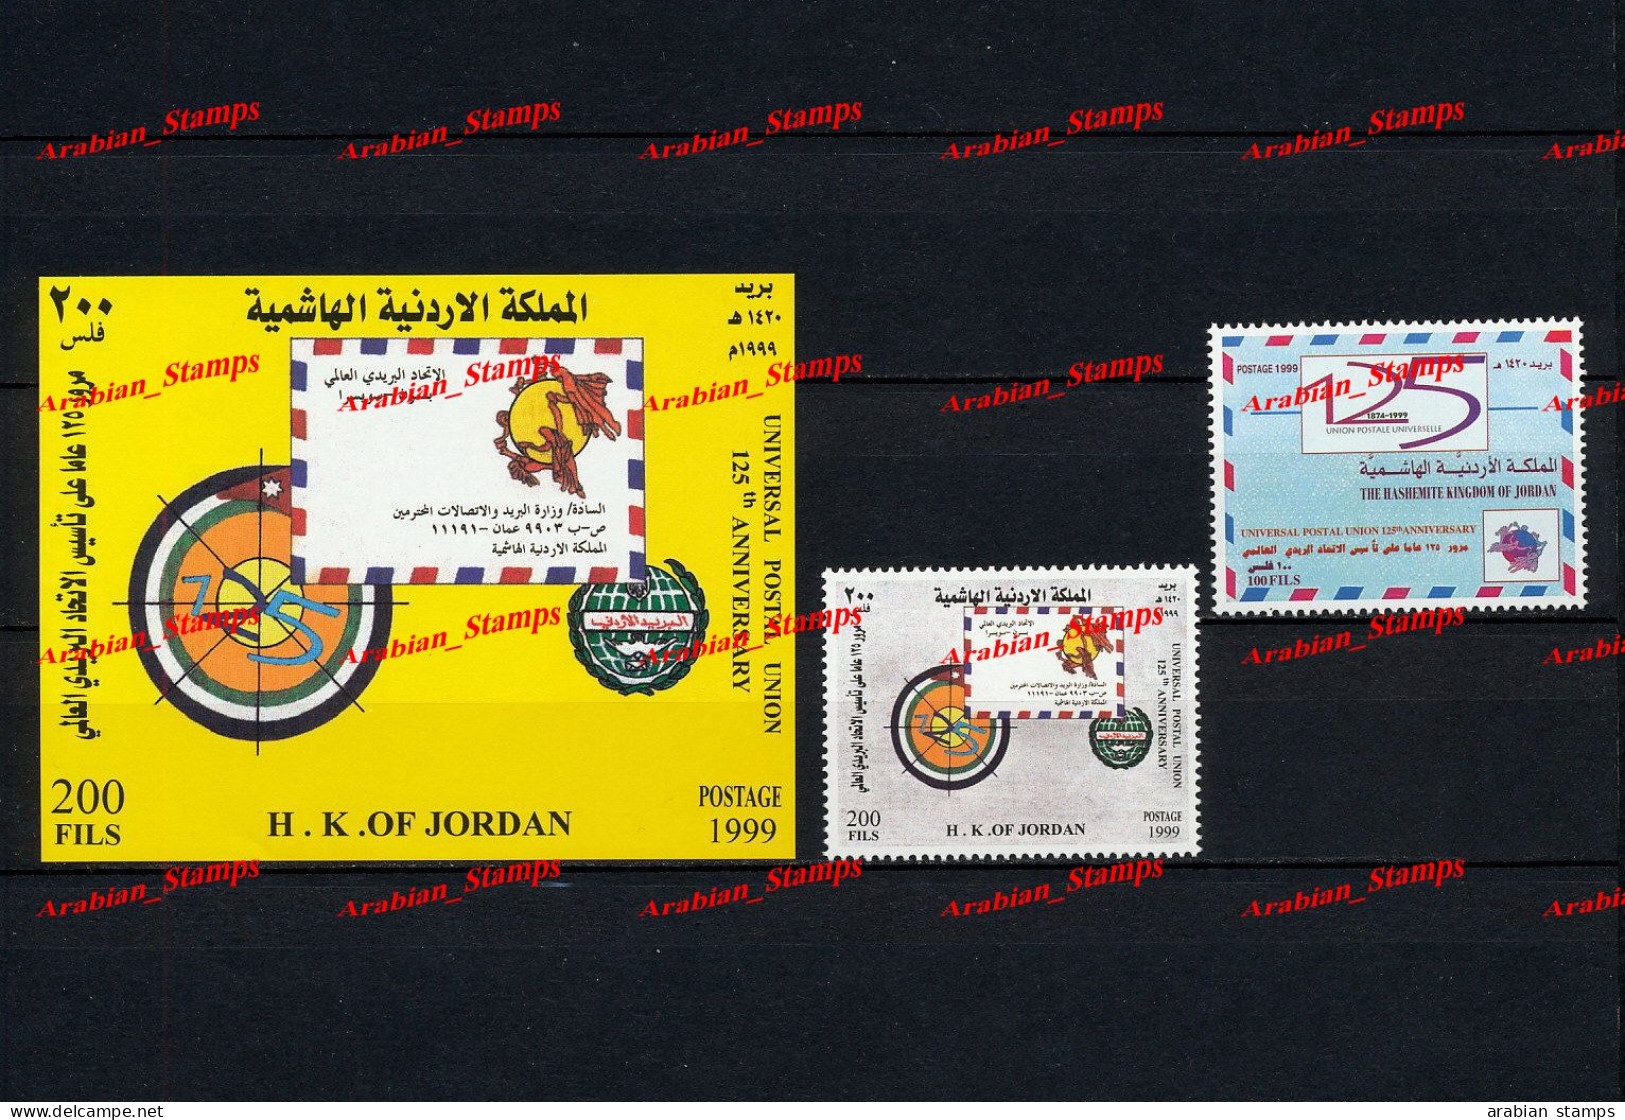 HASHIMATE KINGDOM OF JORDAN JORDANIE 1999 MINT MNH MS SHEET SS 125TH ANNIVERSARY UNIVERSAL POSTAL UNION UPU EMBLEM POST - Jordanie